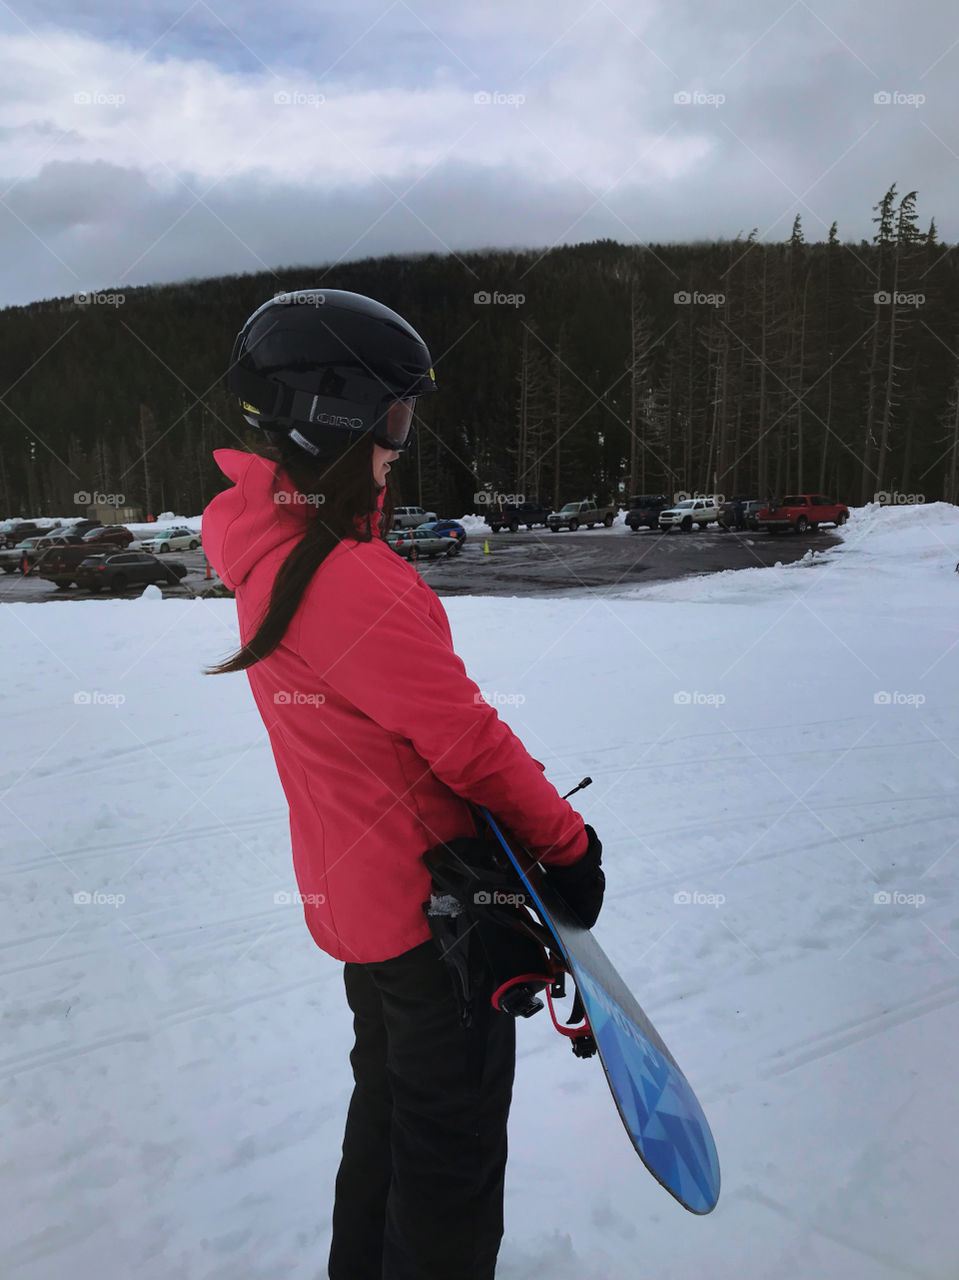 Snowboarding at Mount Bachelor